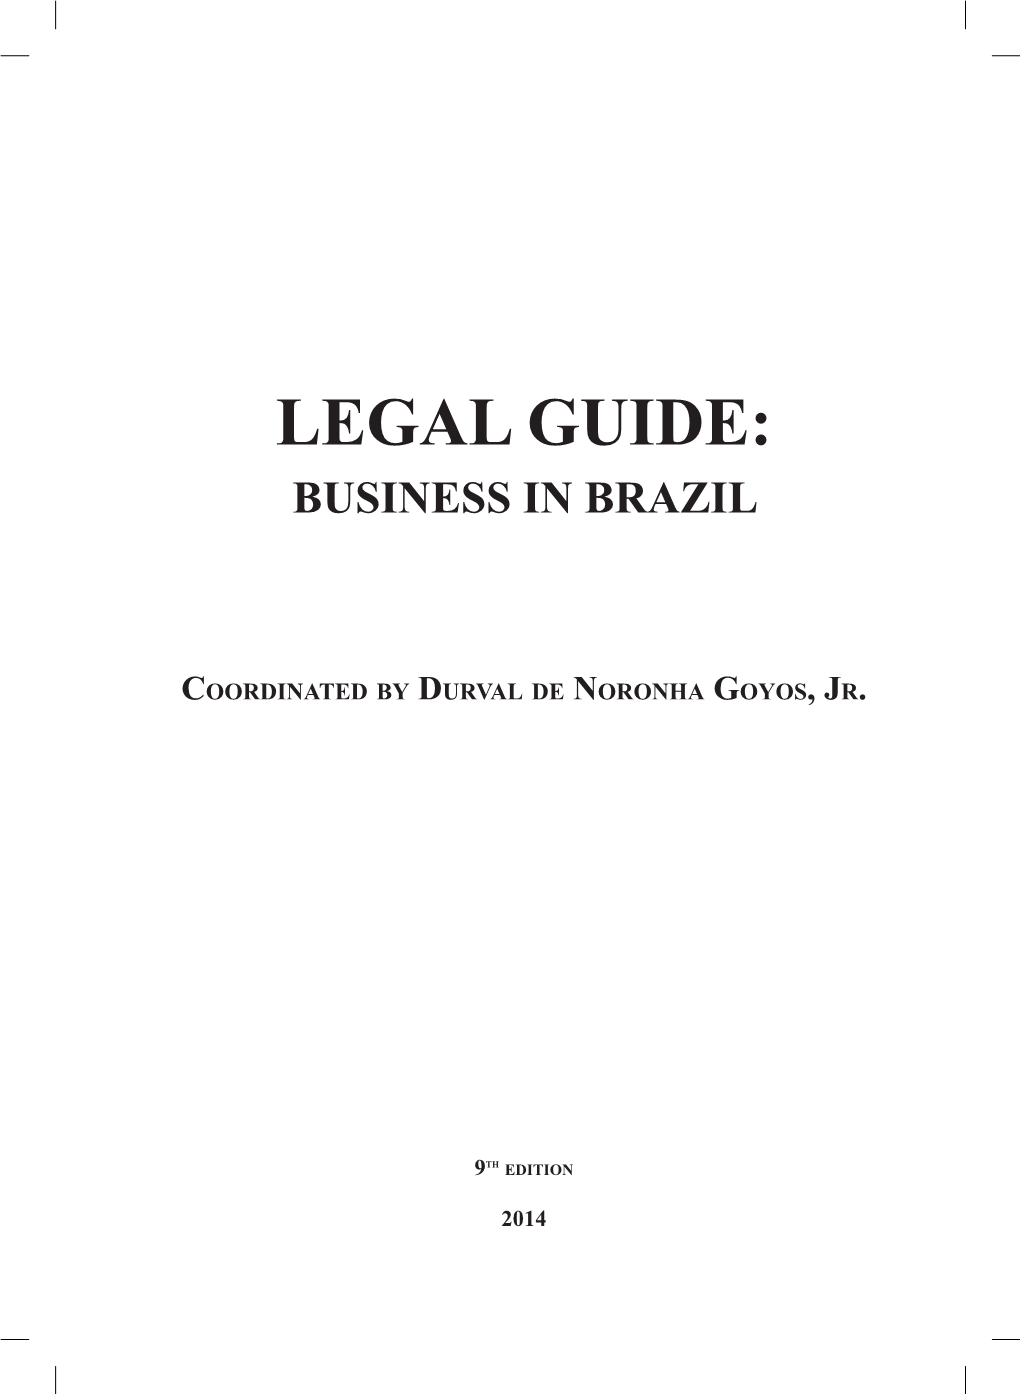 Legal Guide: Business in Brazil